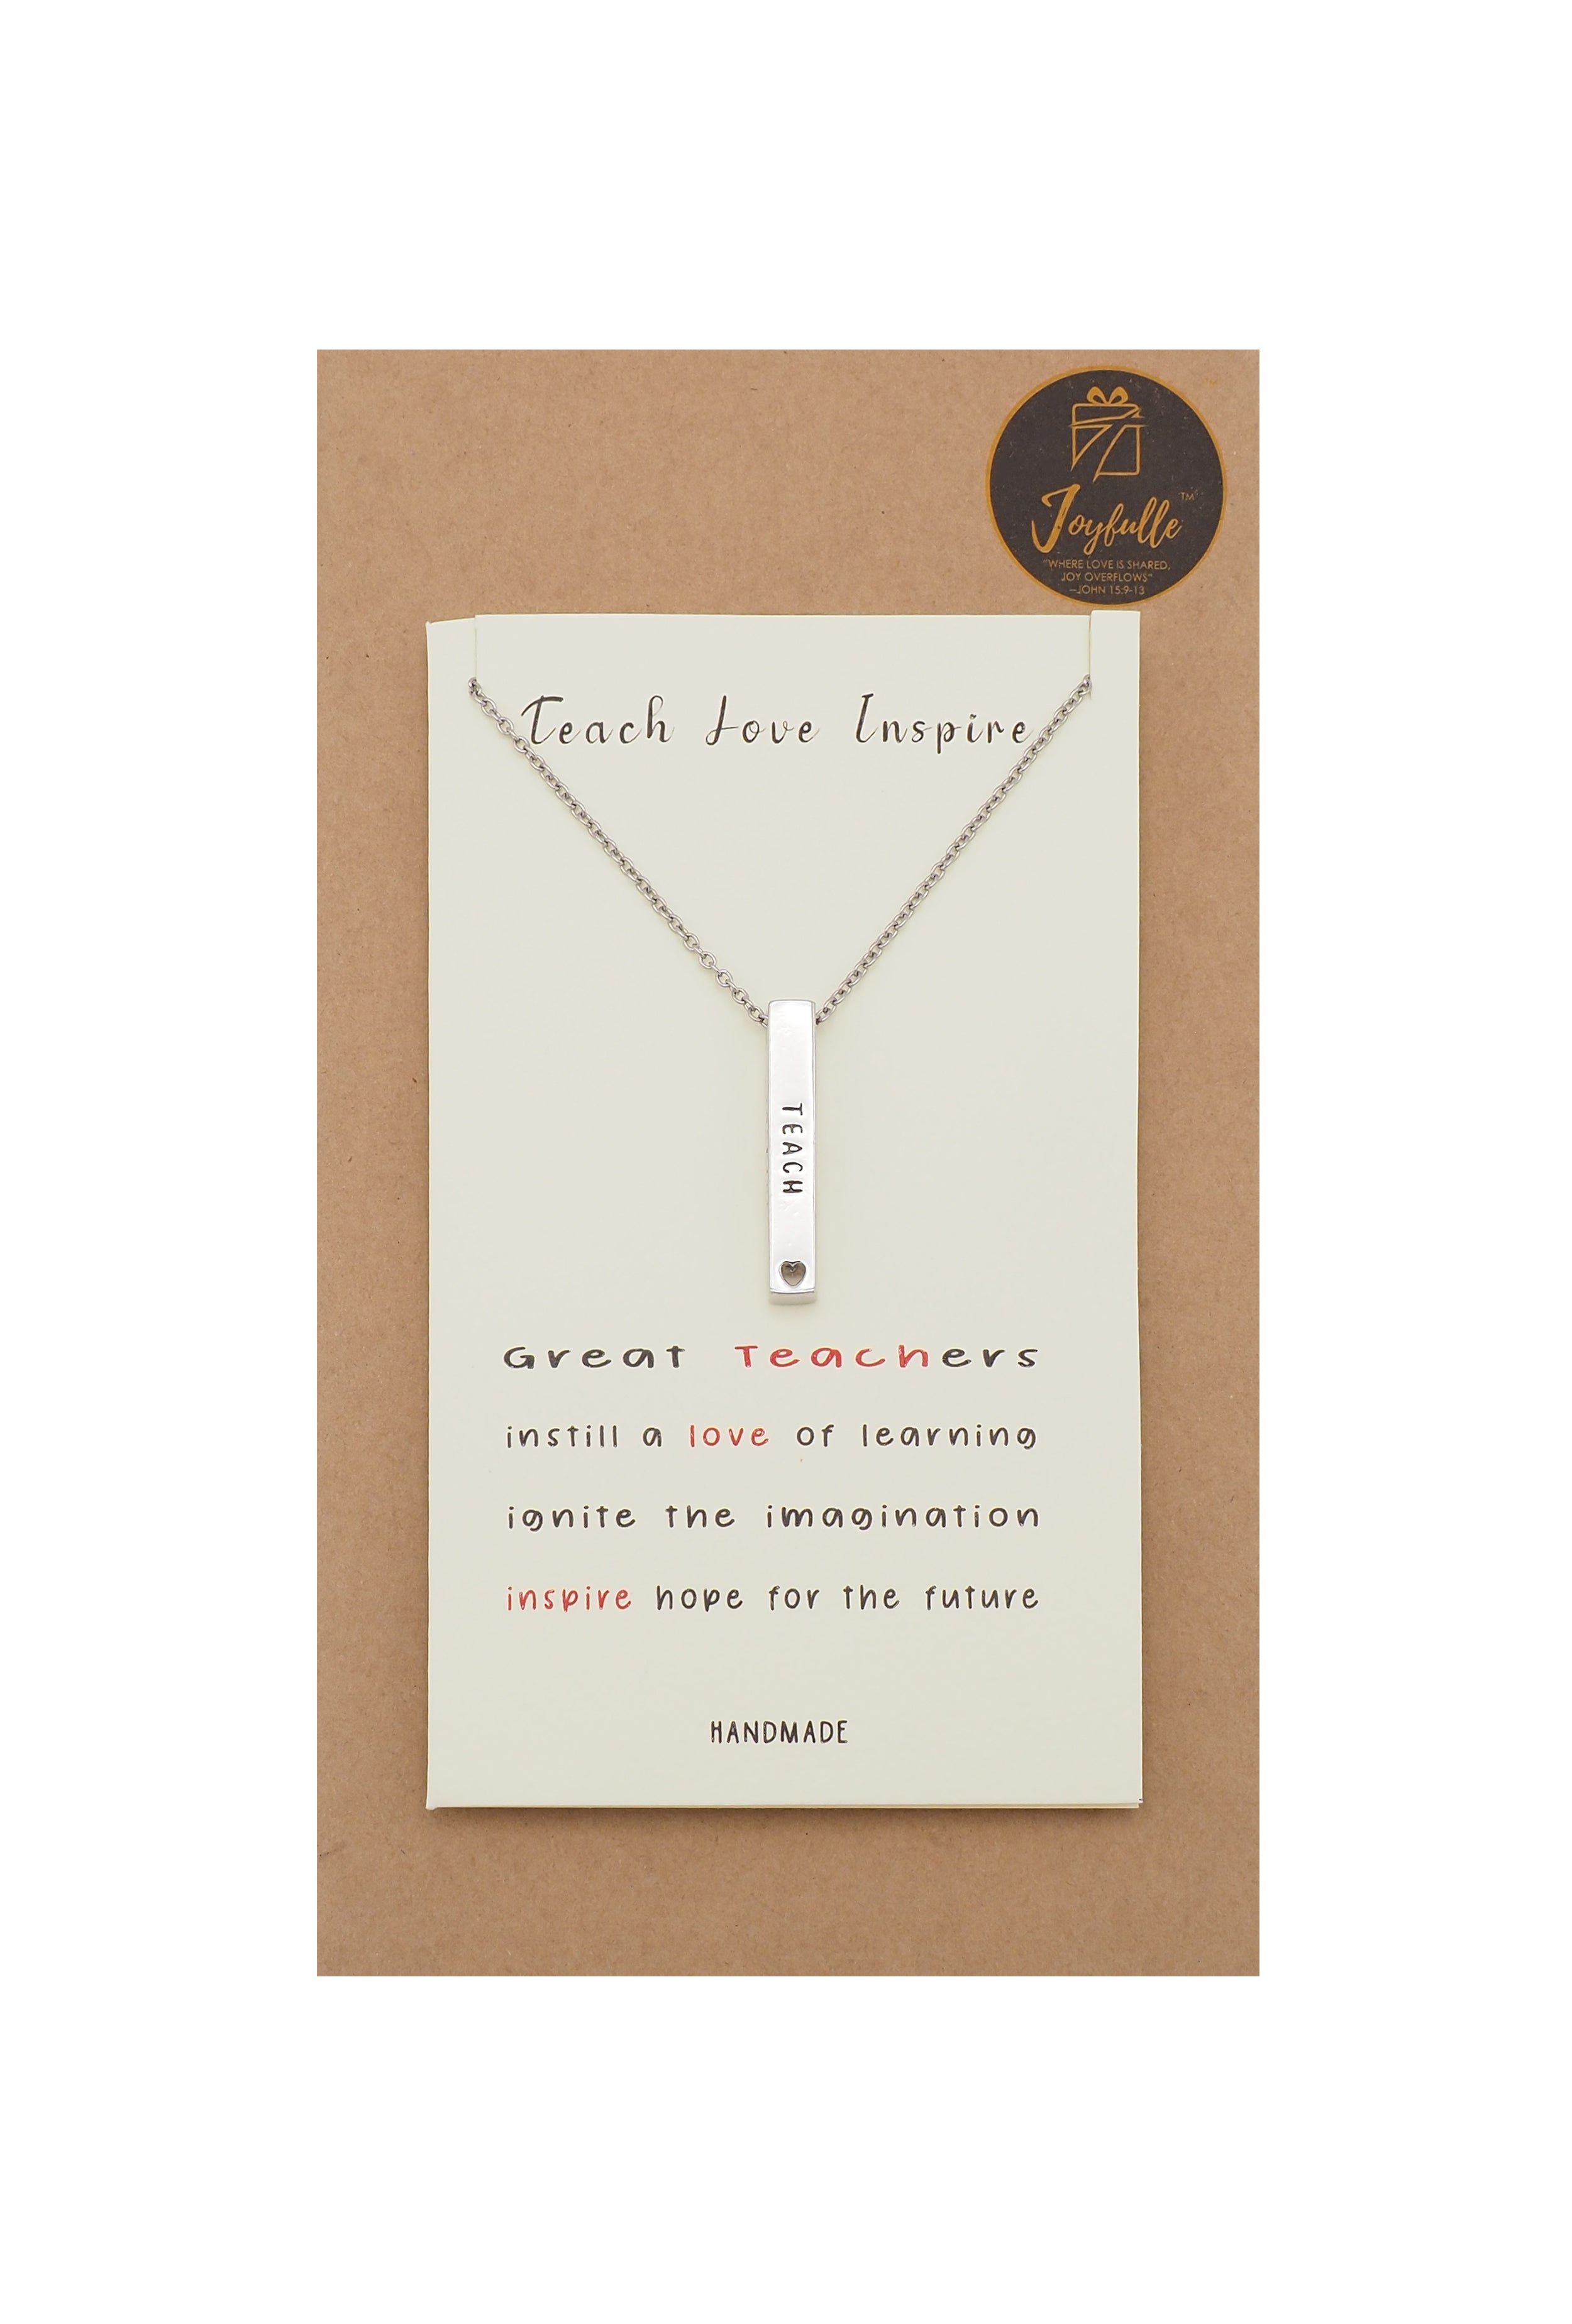 Joyfulle Zina Teach Love Inspire Bar Pendant Necklace, Handmade Teacher Appreciation Gifts for Women with Inspirational Greeting Card